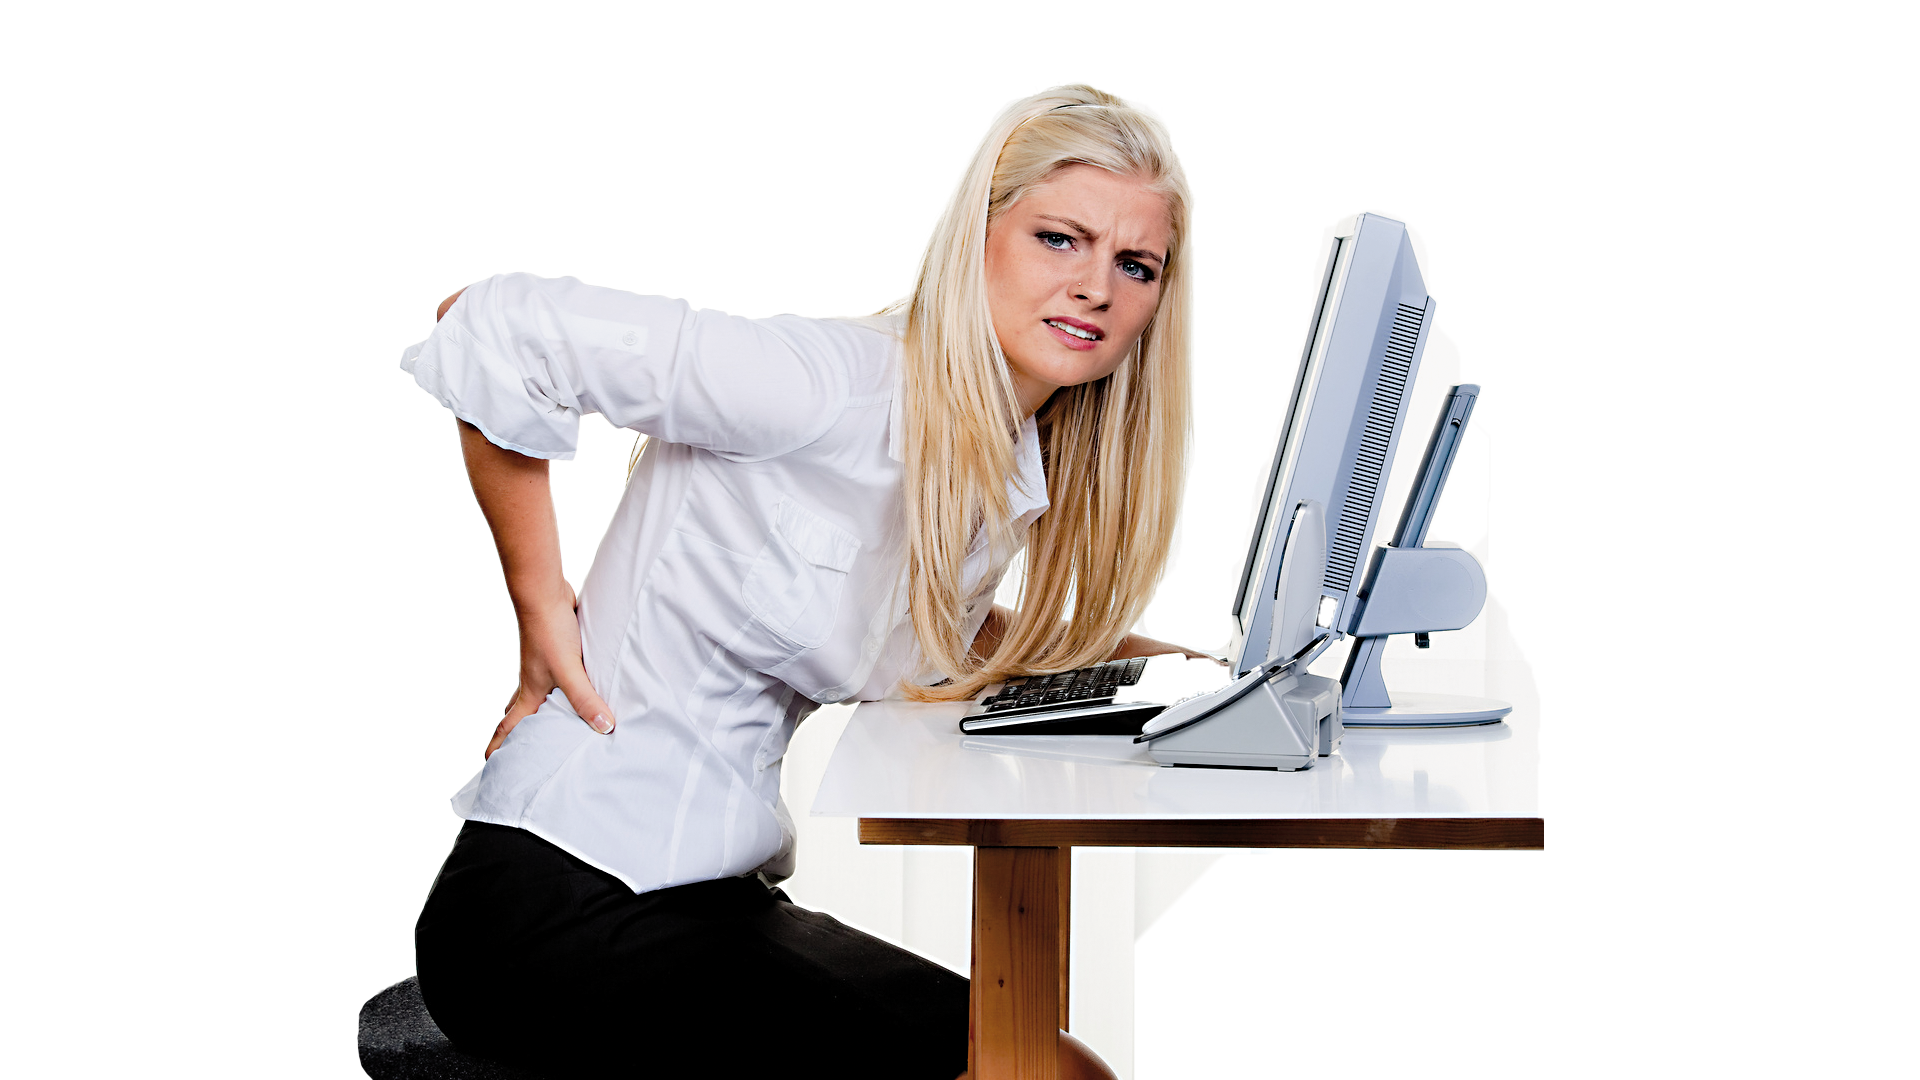 Sitzende Frau mit Rückenproblemen | Bildquelle: Fotolia.com